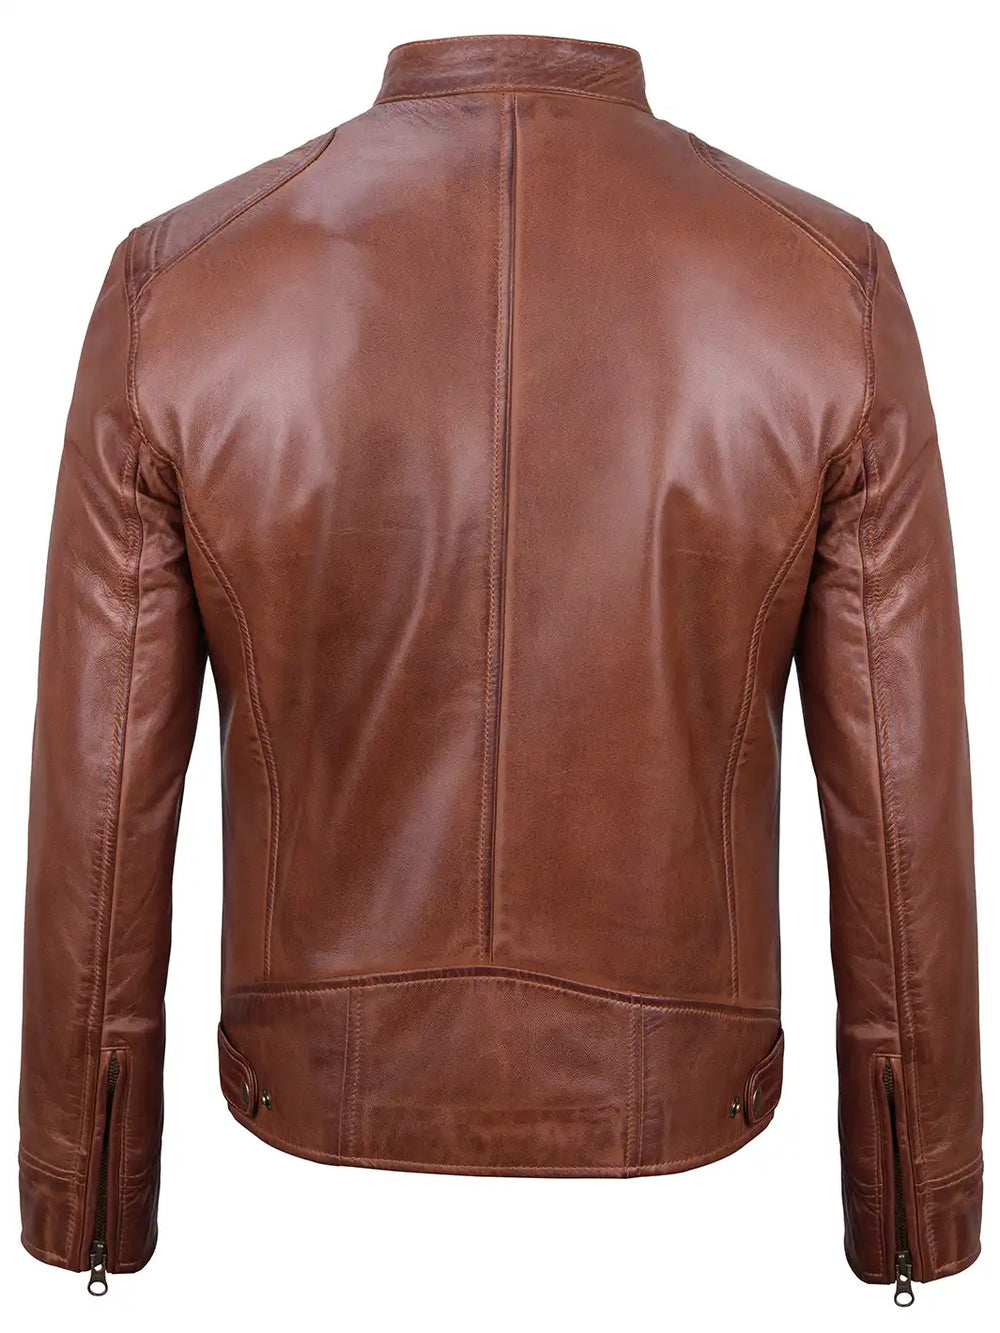 Cafe racer cognac real leather jacket